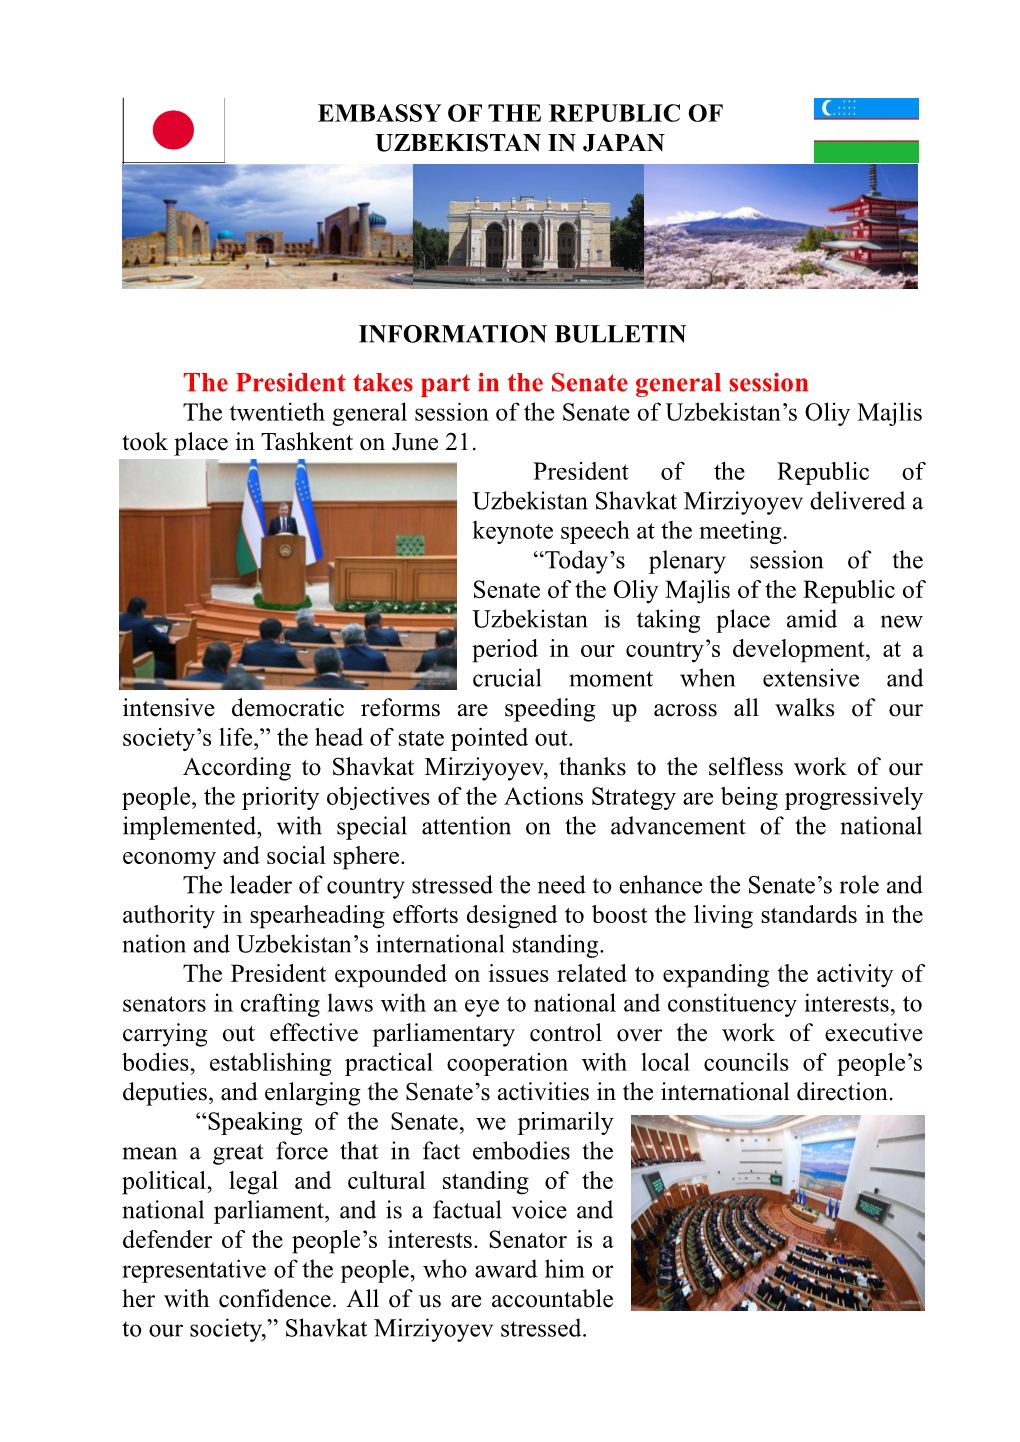 The President Takes Part in the Senate General Session the Twentieth General Session of the Senate of Uzbekistan’S Oliy Majlis Took Place in Tashkent on June 21